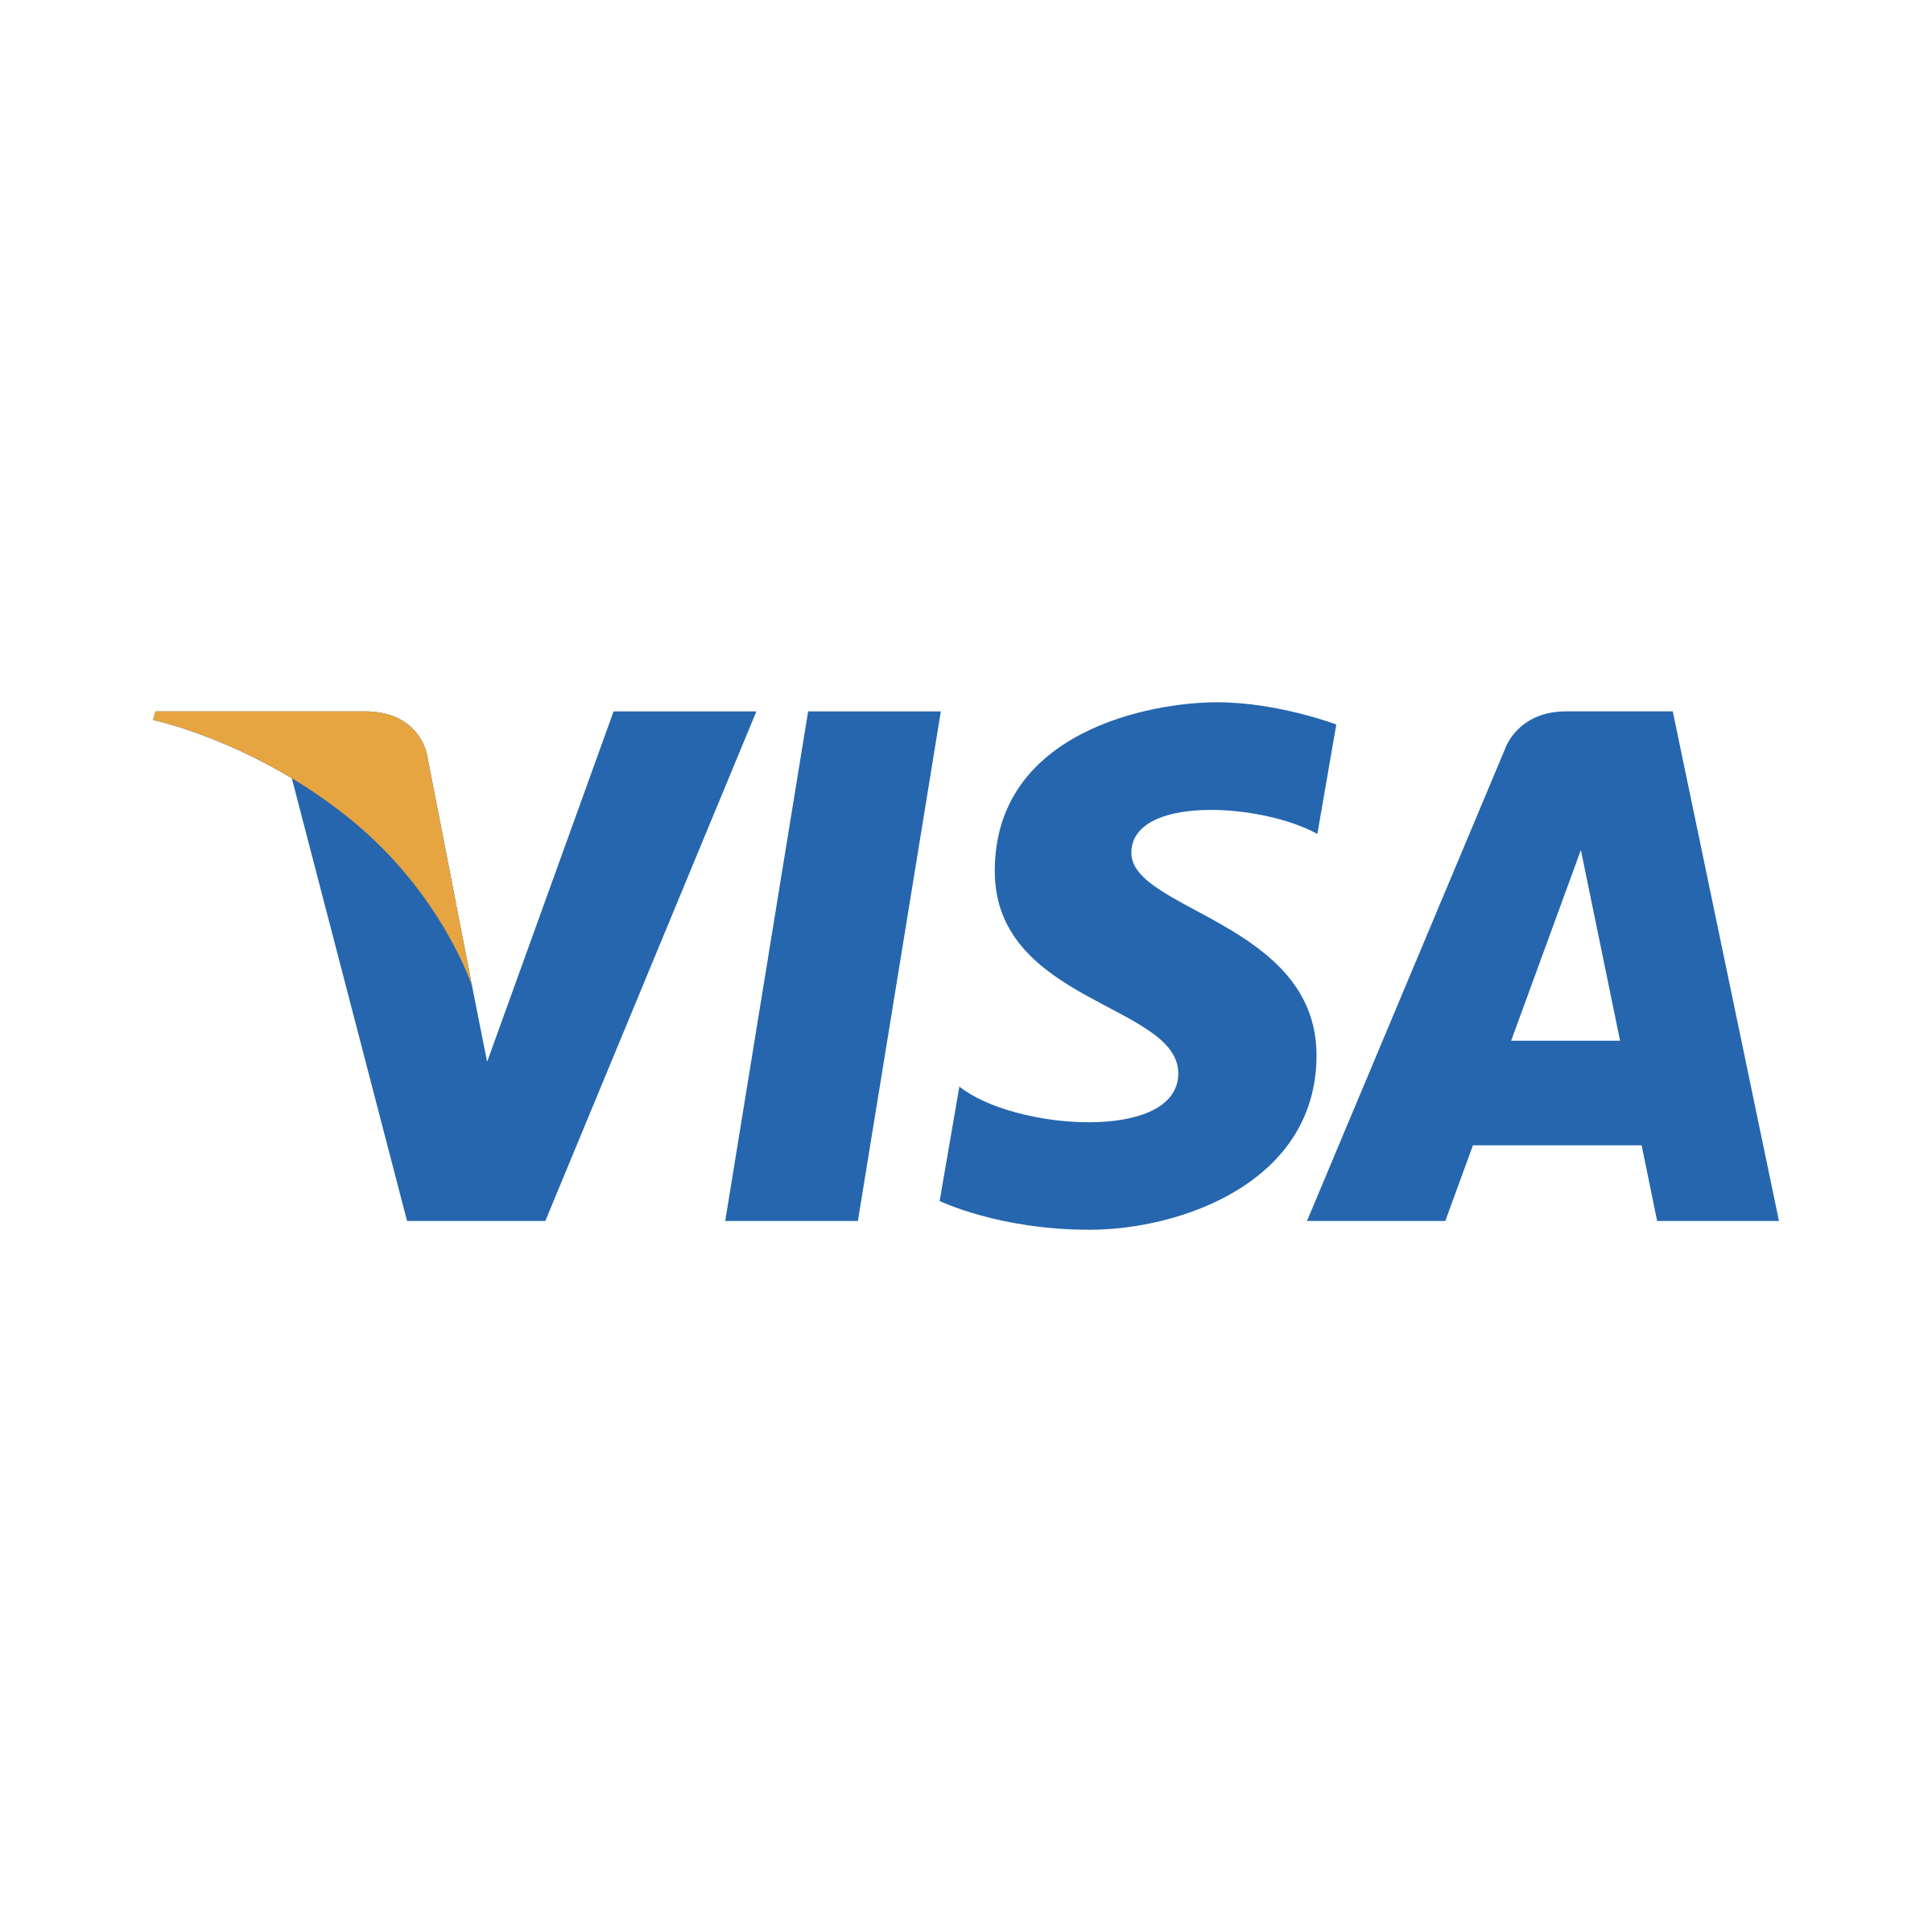 visa-logo-png-transparent.png